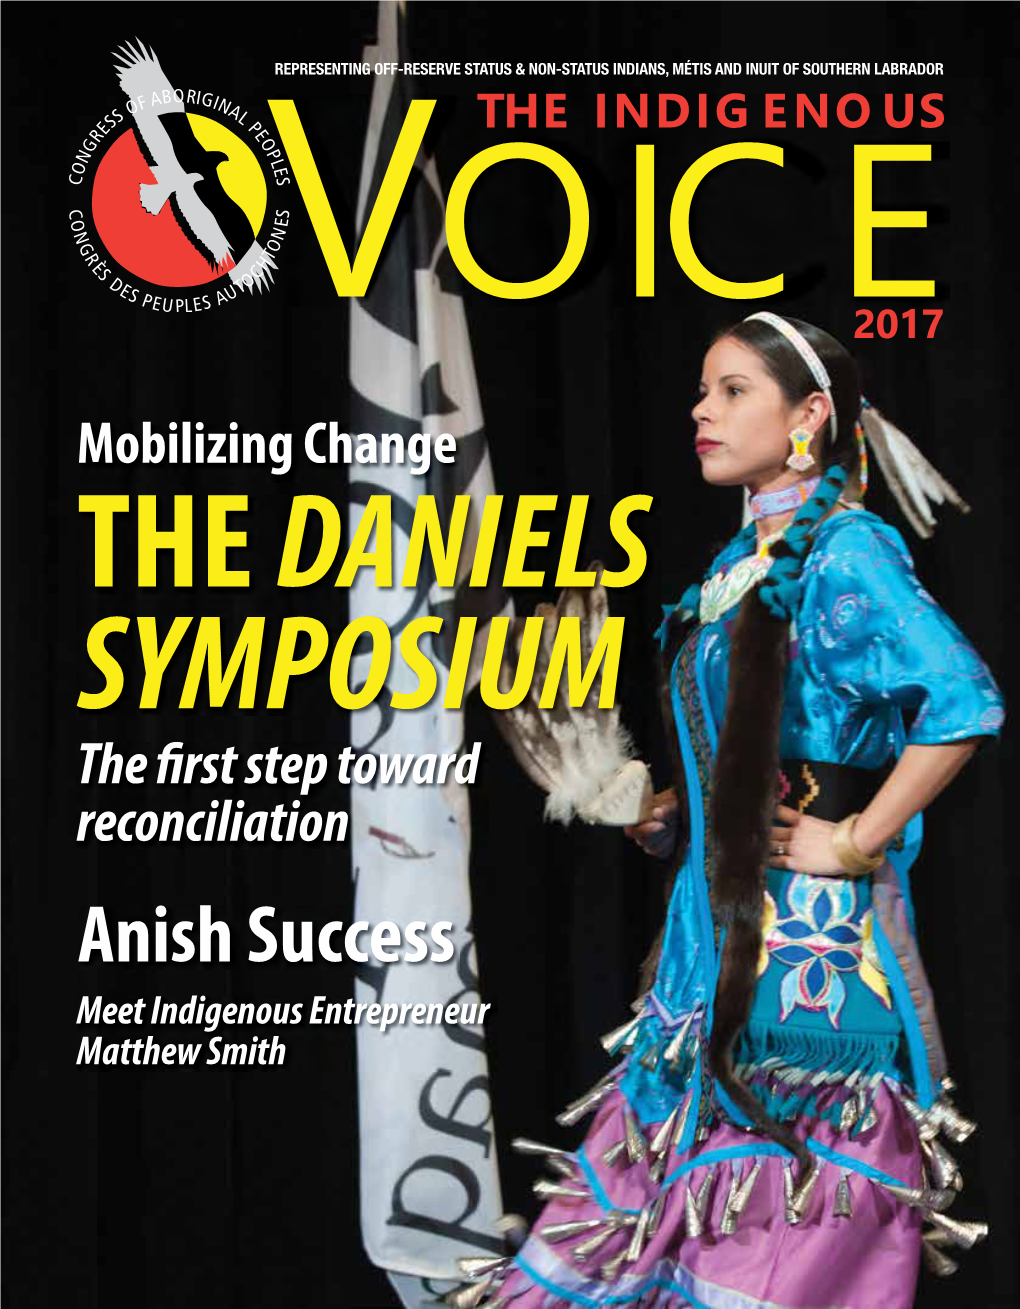 Anish Success Meet Indigenous Entrepreneur Matthew Smith